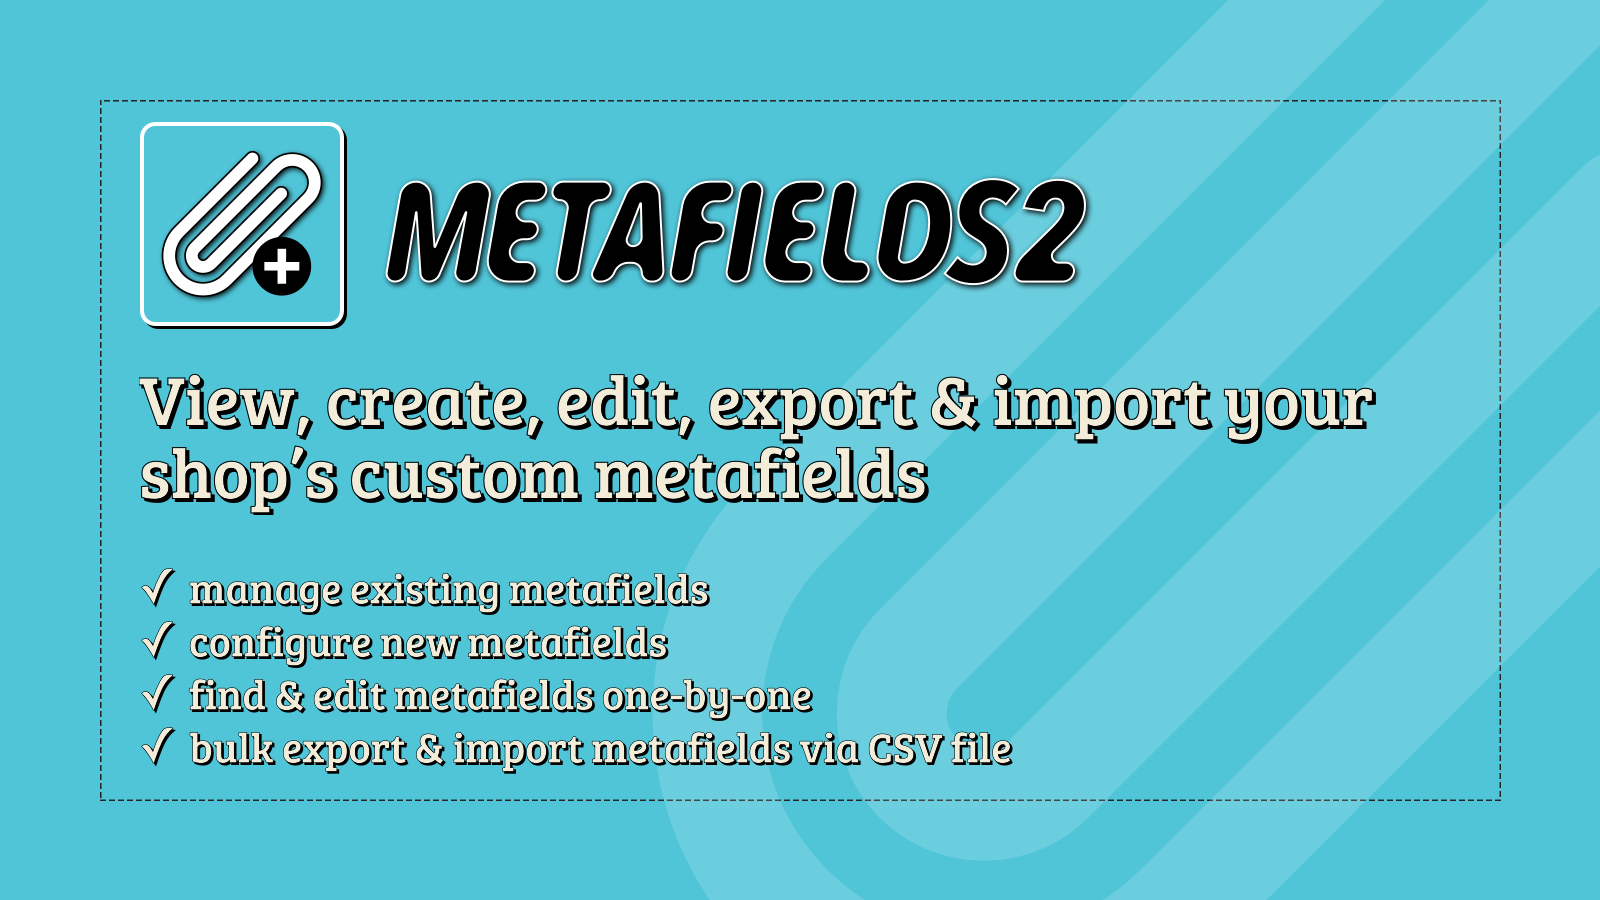 Metafields2 - 创建、编辑、导出/导入您的自定义元字段